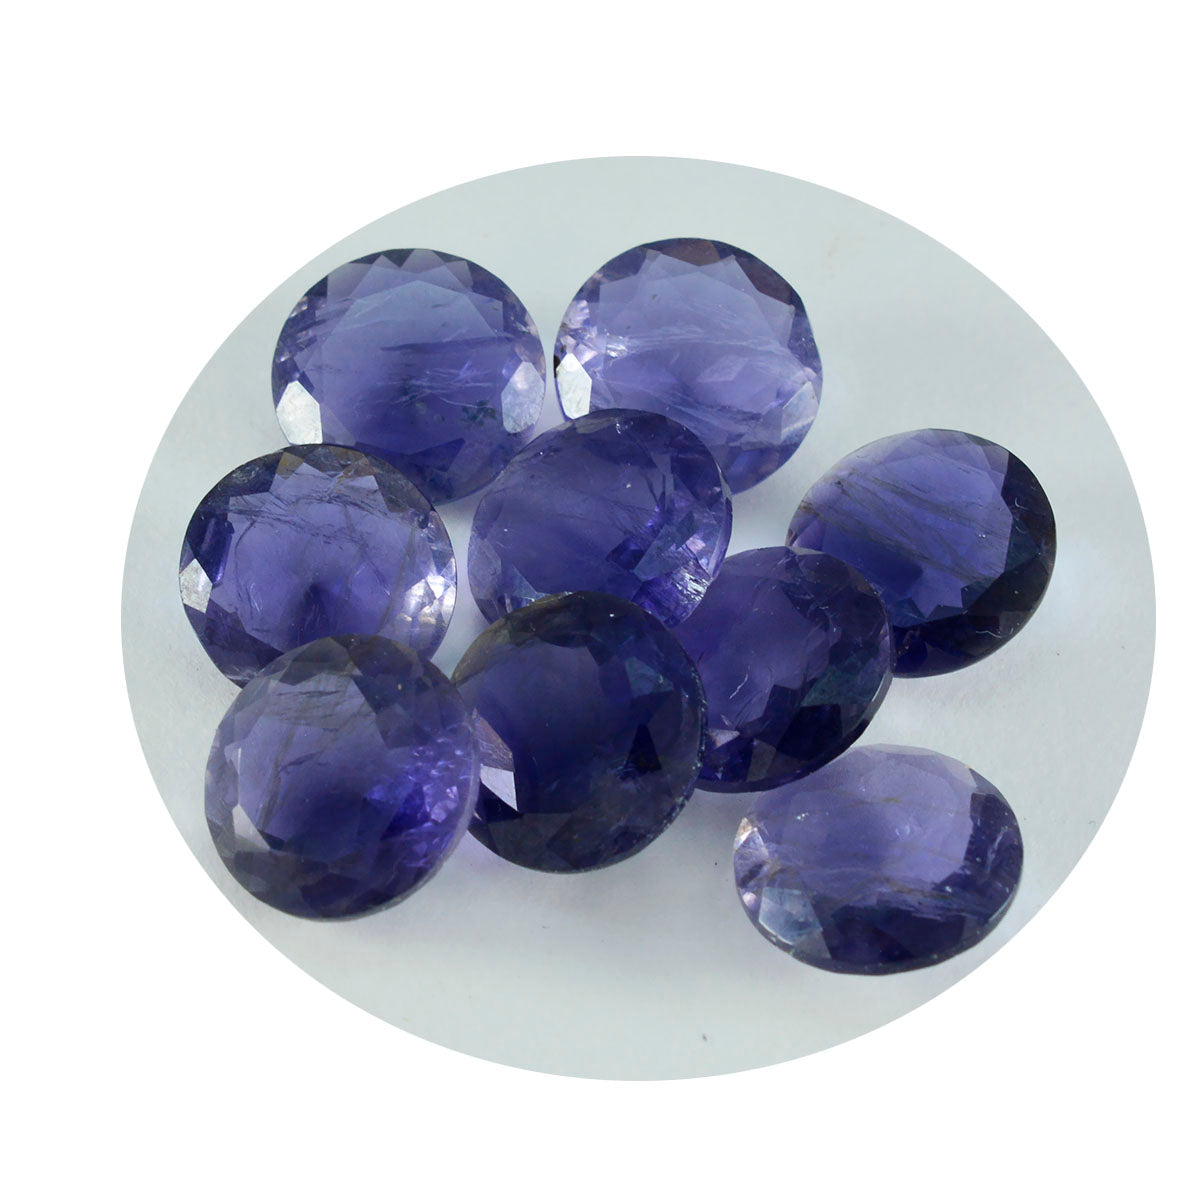 Riyogems 1PC Blue Iolite Faceted 15x15 mm Round Shape amazing Quality Loose Stone